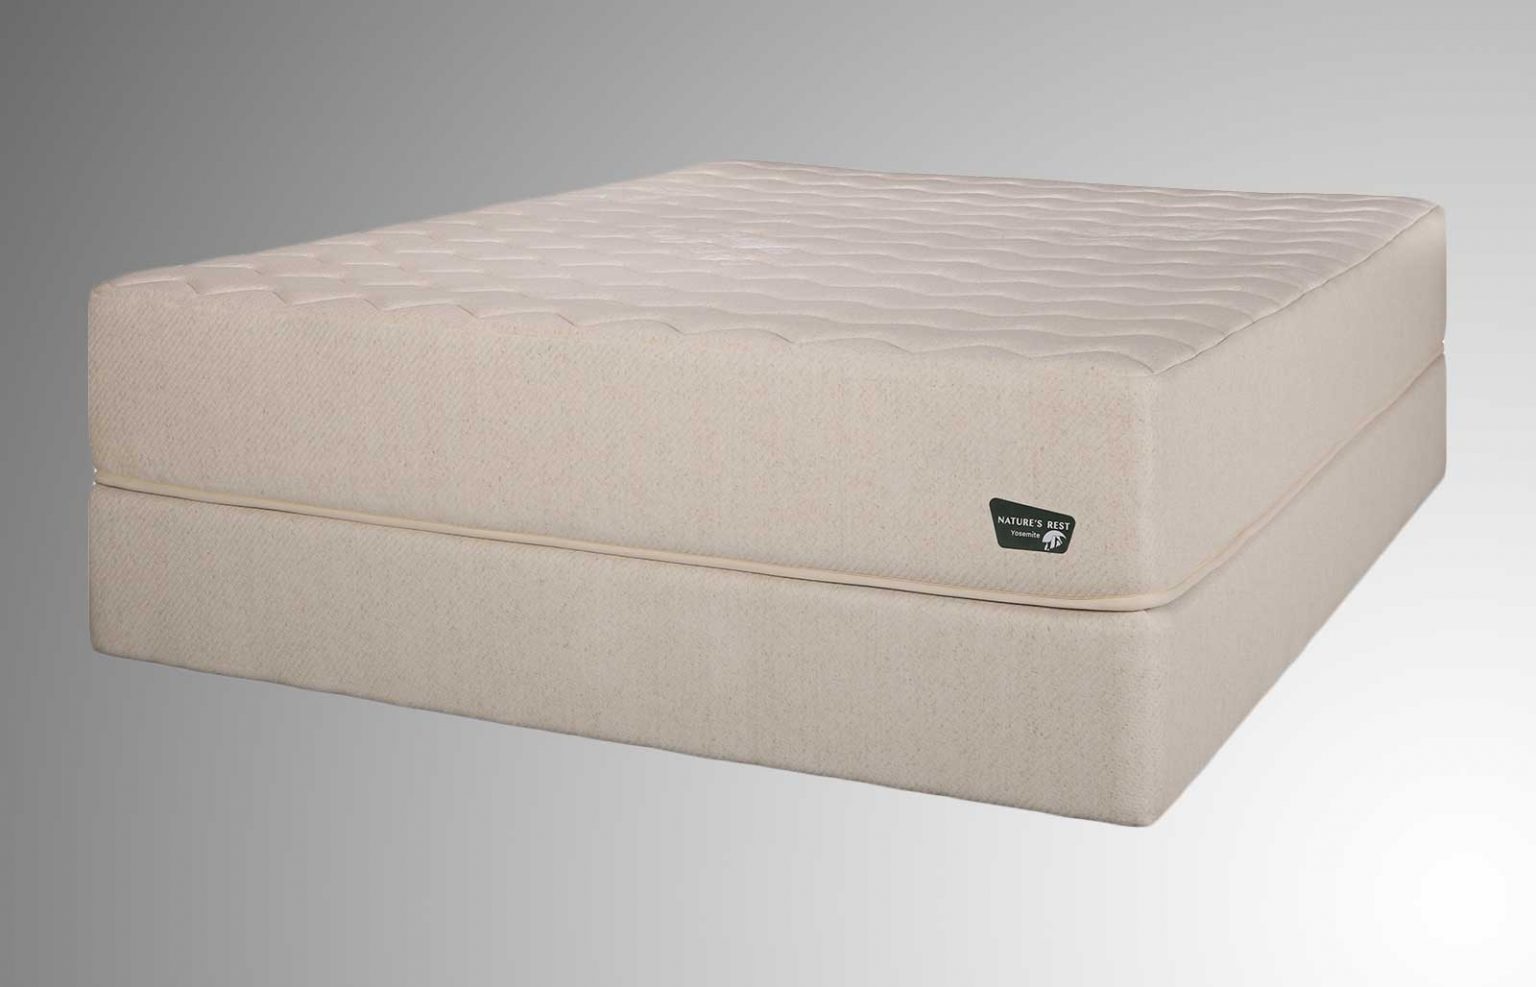 ultra firm mattress costco